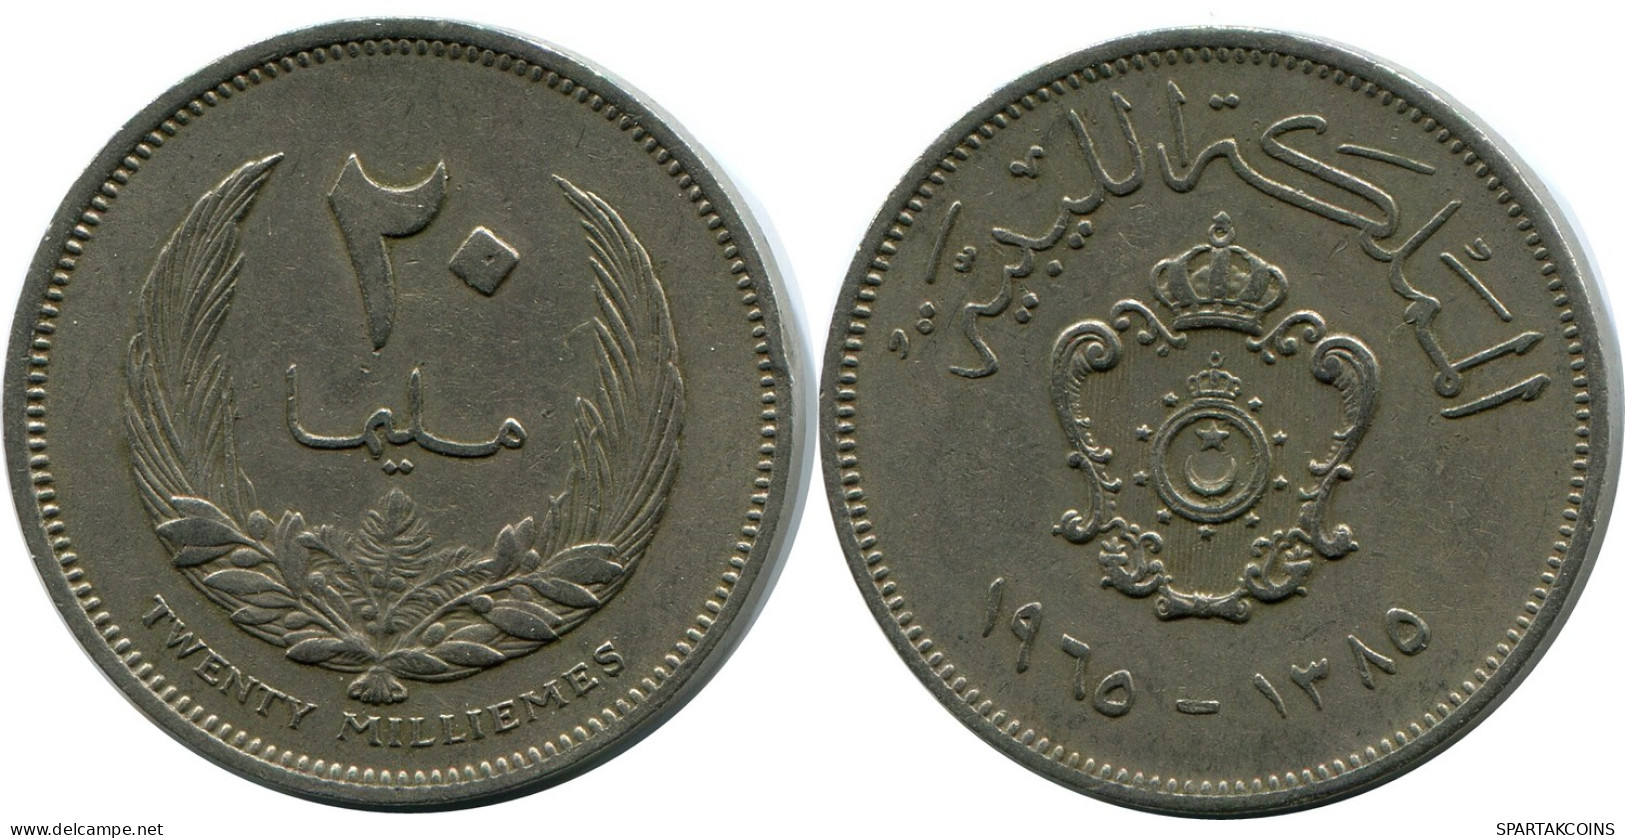 20 MILLIEMES 1965 LIBYA Islamic Coin #AK277.U - Libya